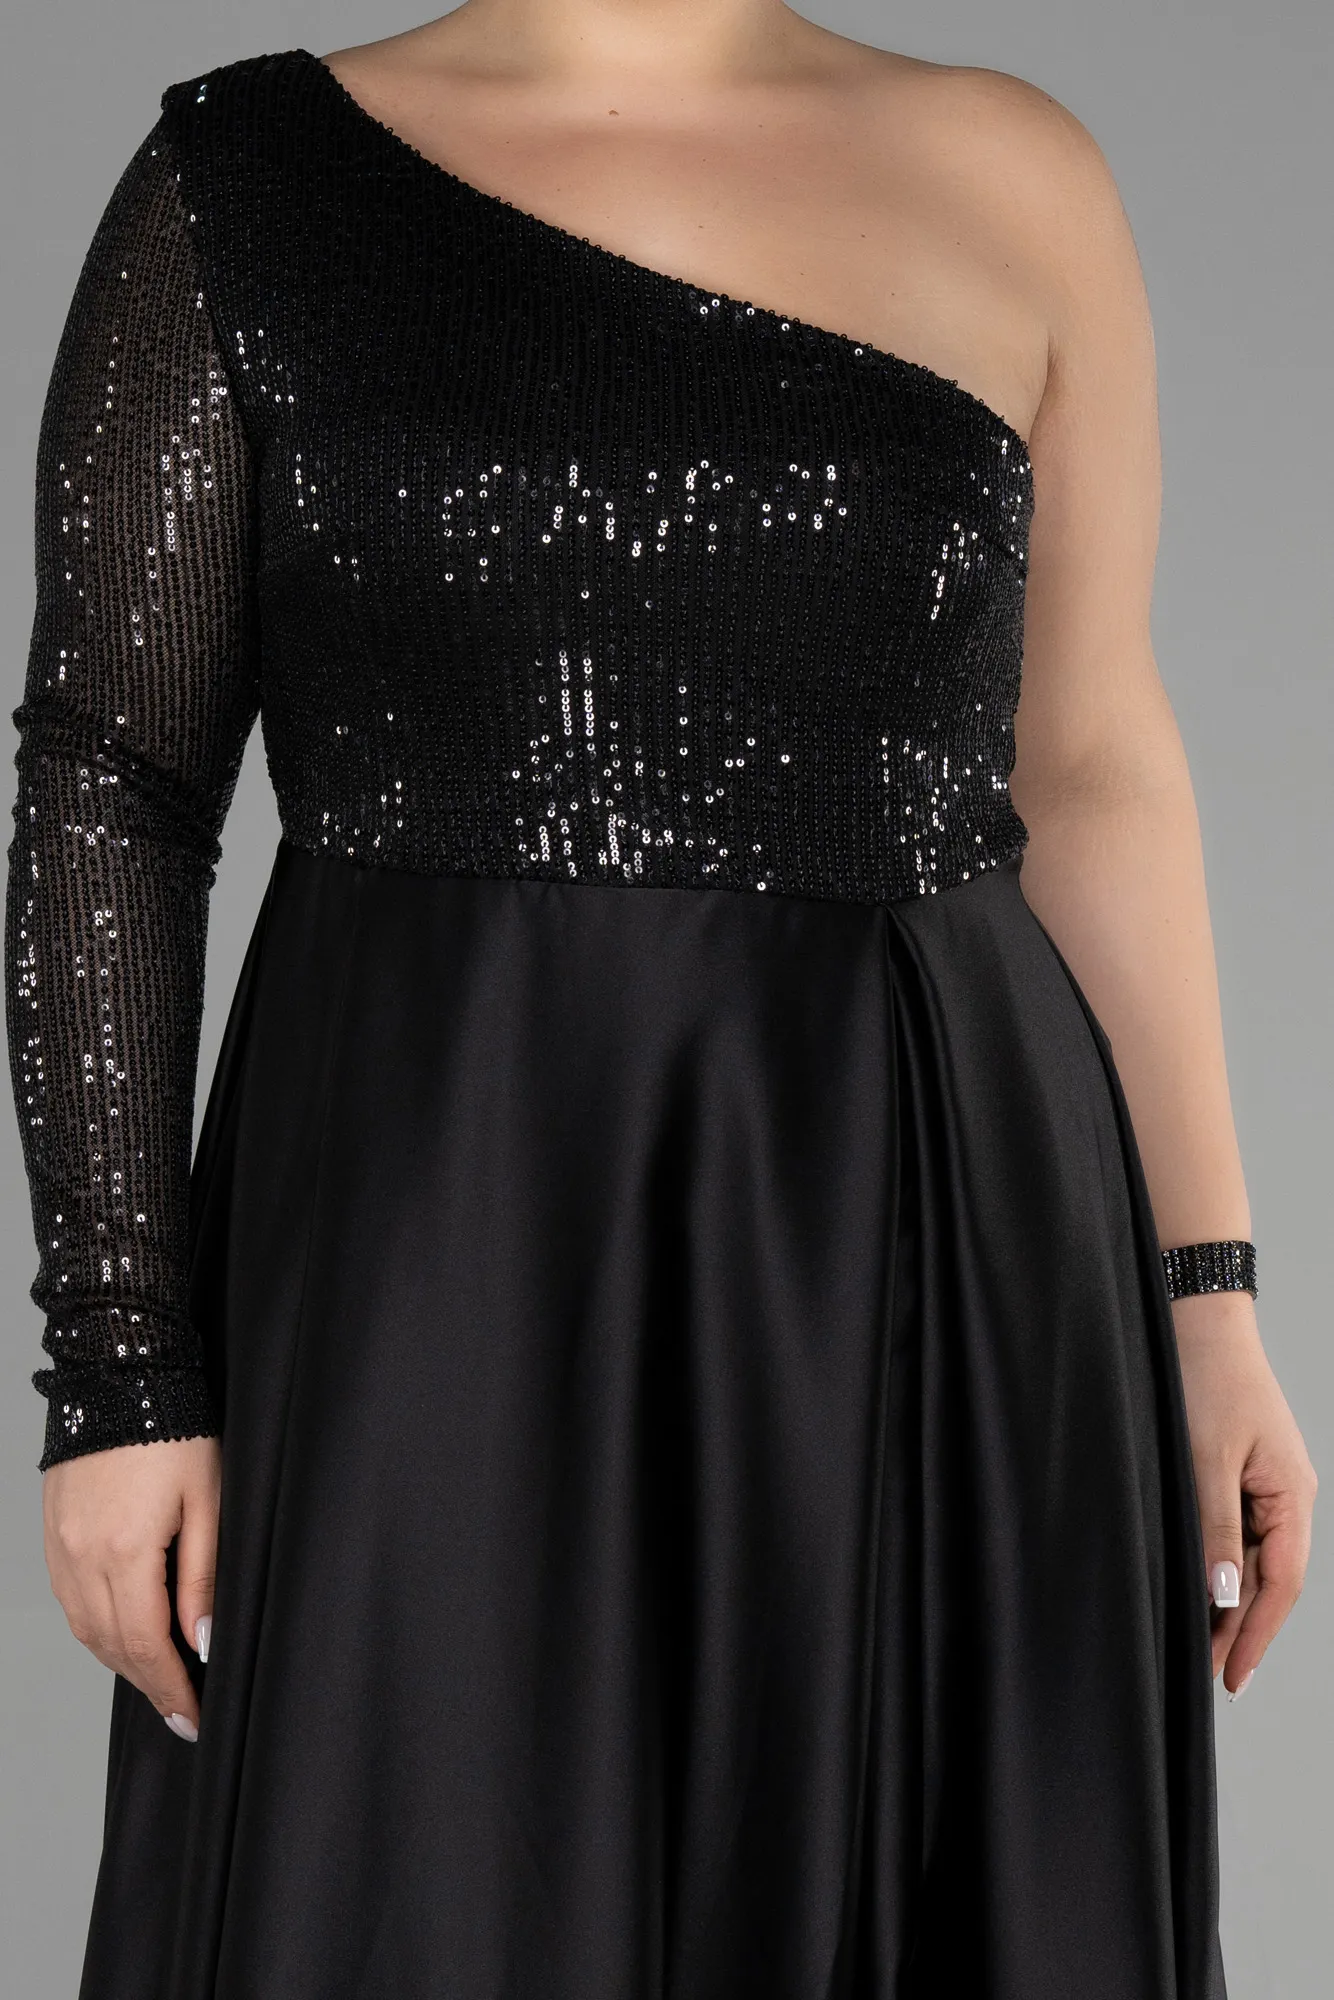 Black-Long Plus Size Evening Dress ABU2165